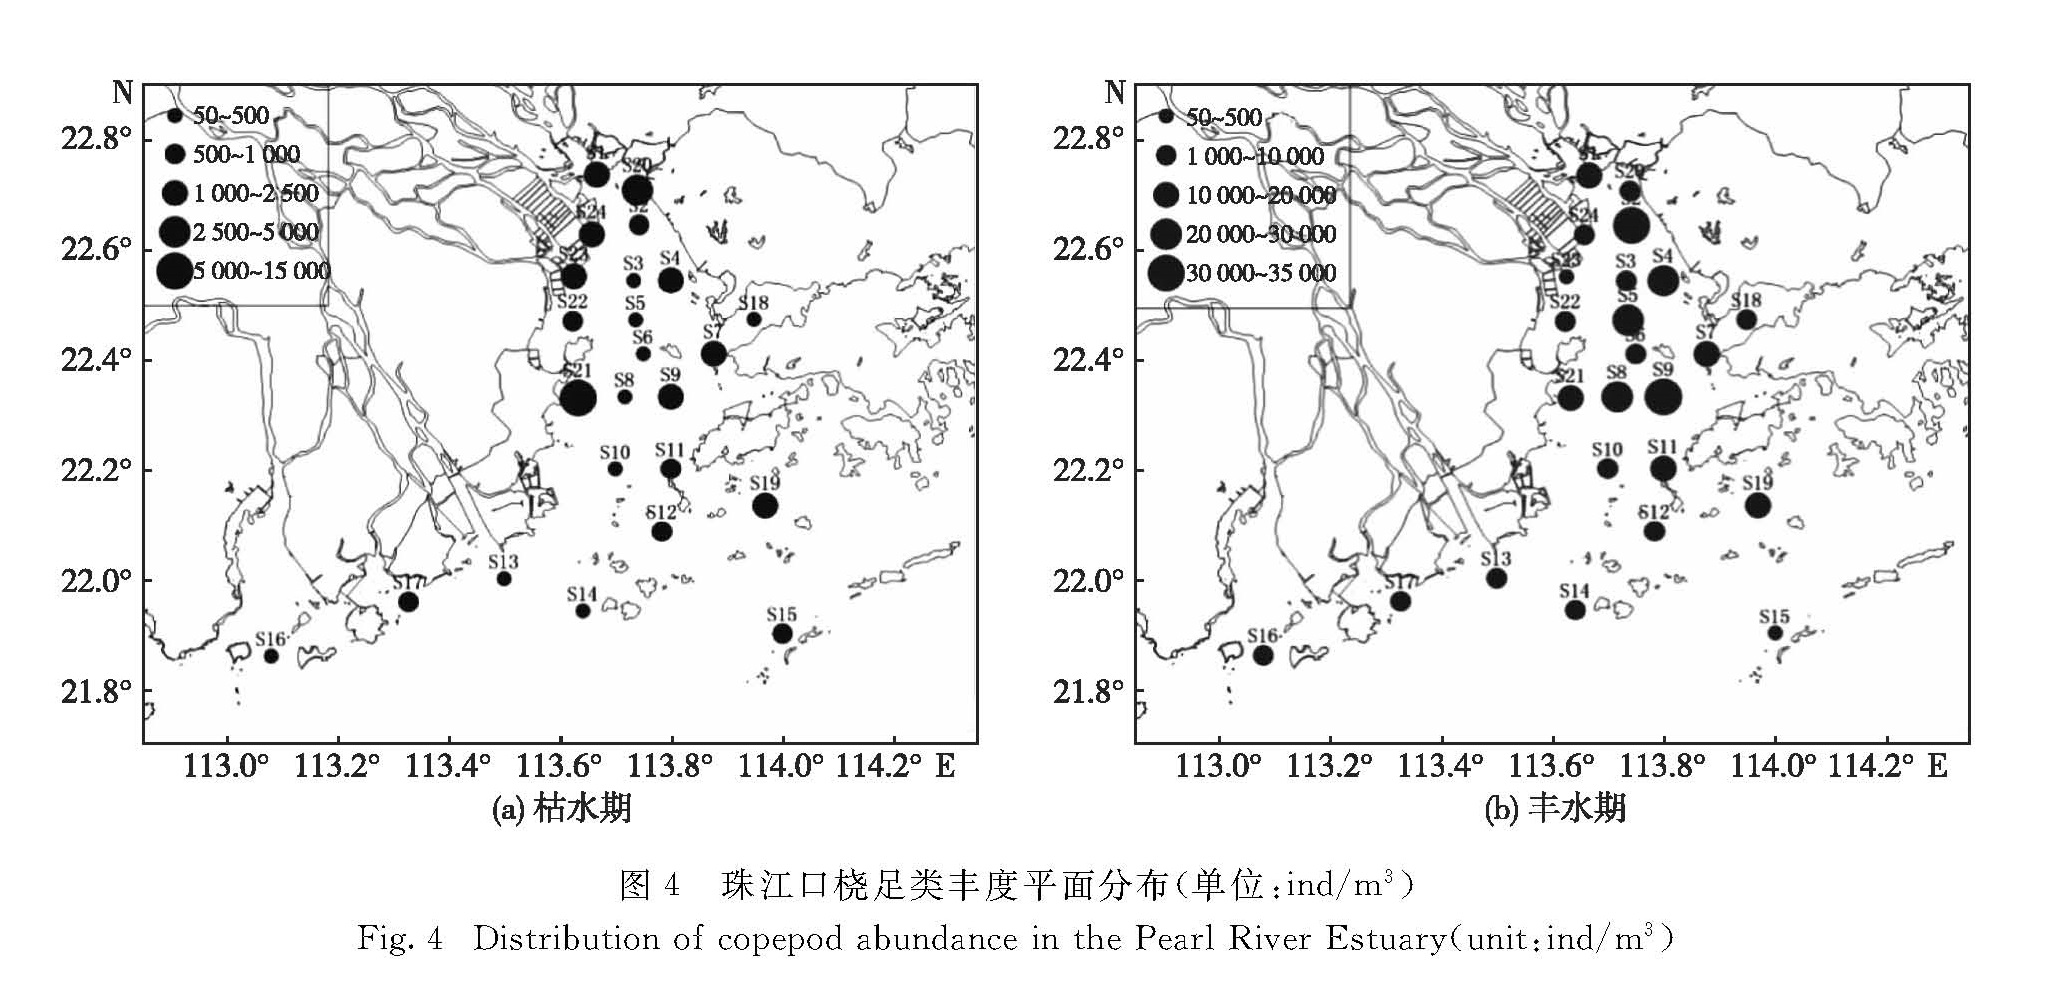 图4 珠江口桡足类丰度平面分布(单位:ind/m3)<br/>Fig.4 Distribution of copepod abundance in the Pearl River Estuary(unit:ind/m3)